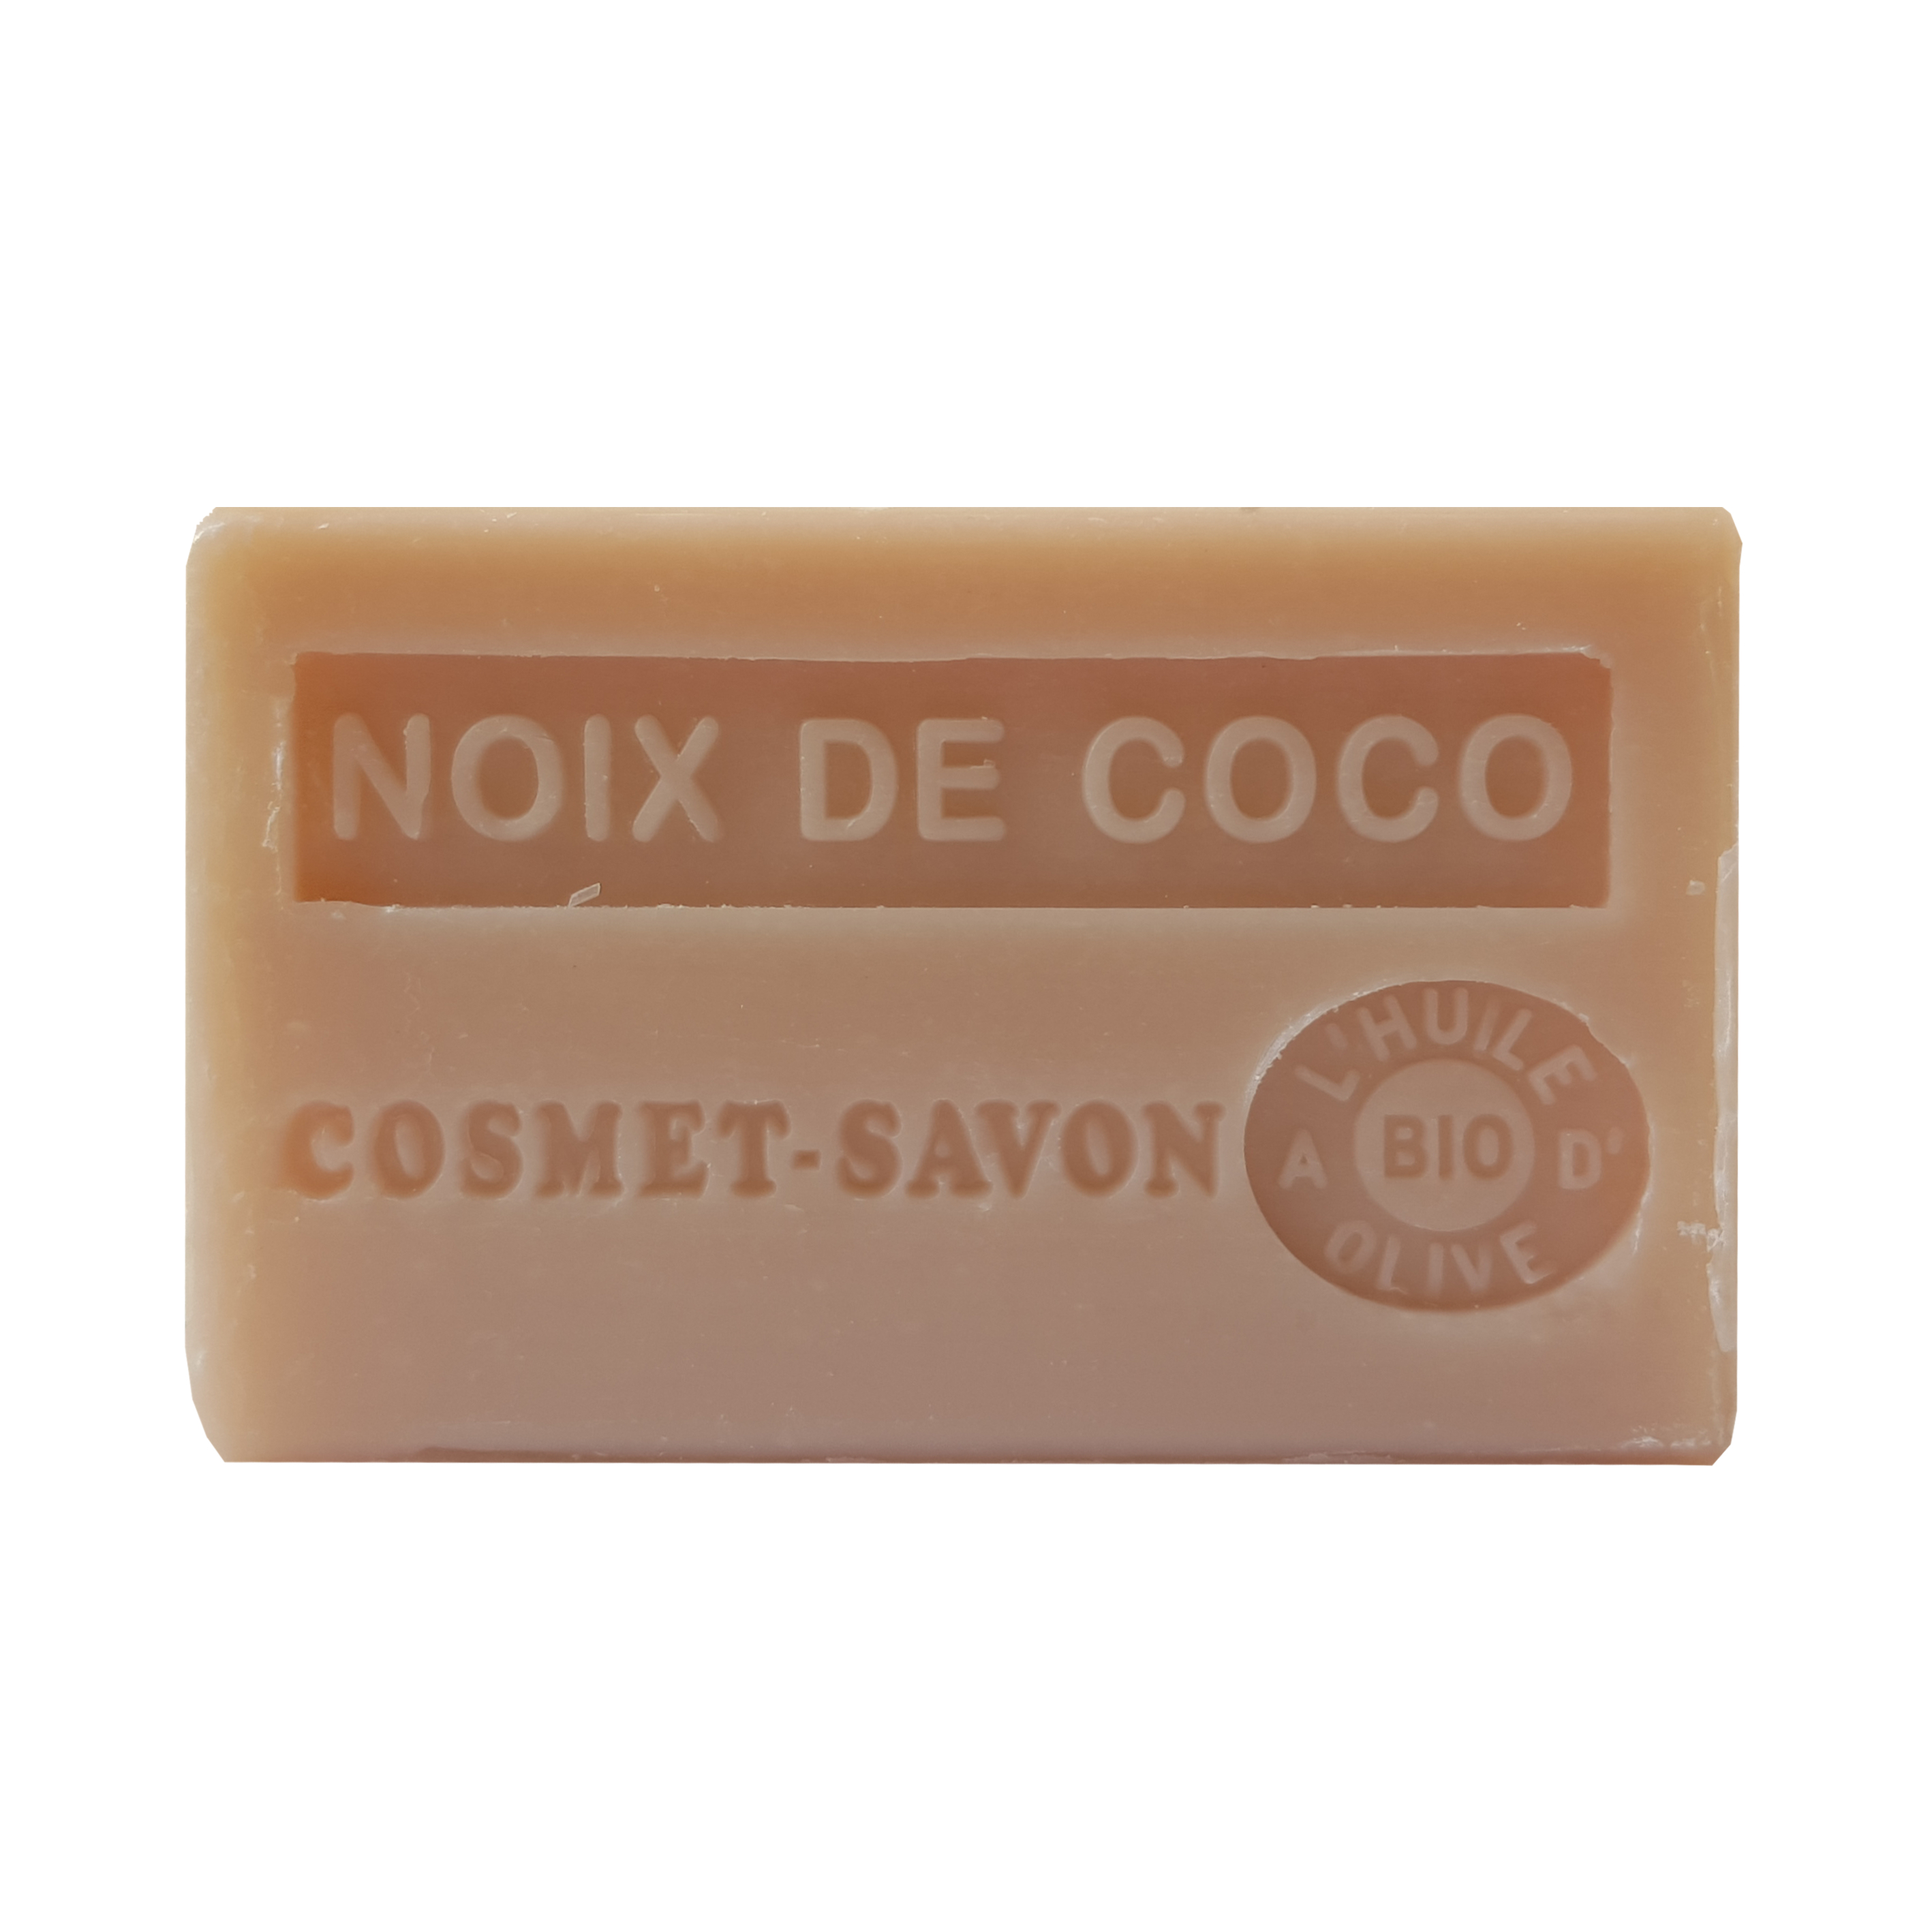 noix-de-coco-savon-125gr-au-beurre-de-karite-bio-cosmet-savon-3665205006607-face-JPEG